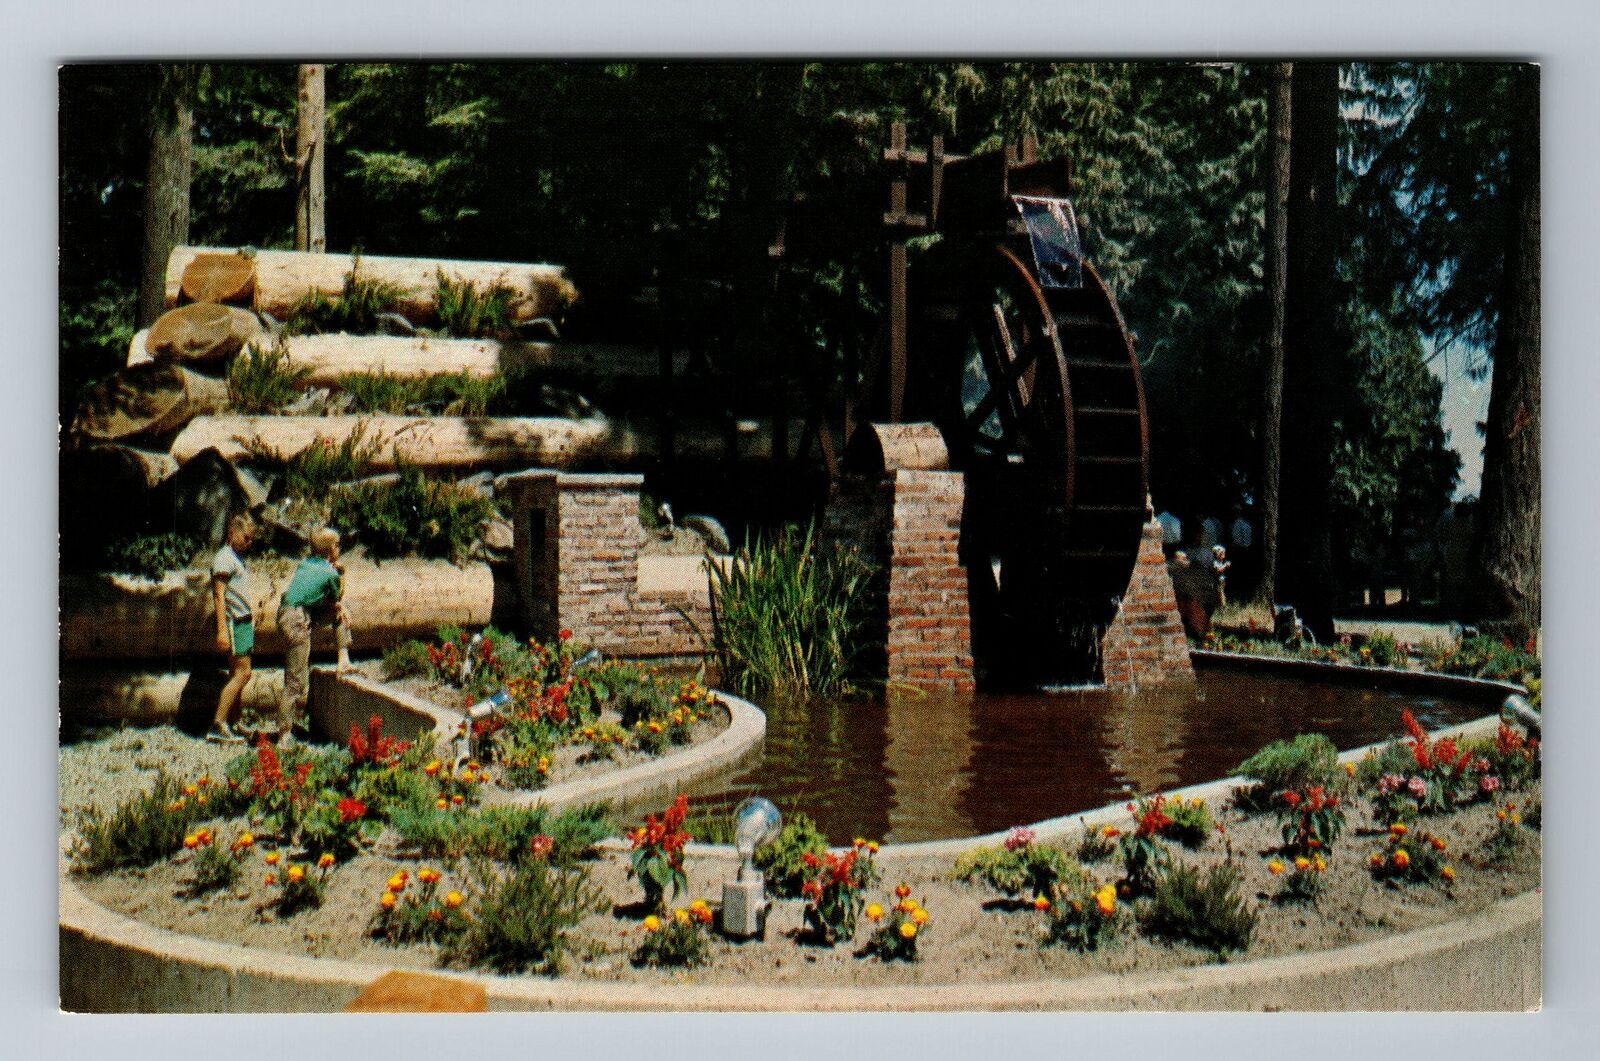 Chemainus-British Columbia, The Water Wheel, Vintage Postcard